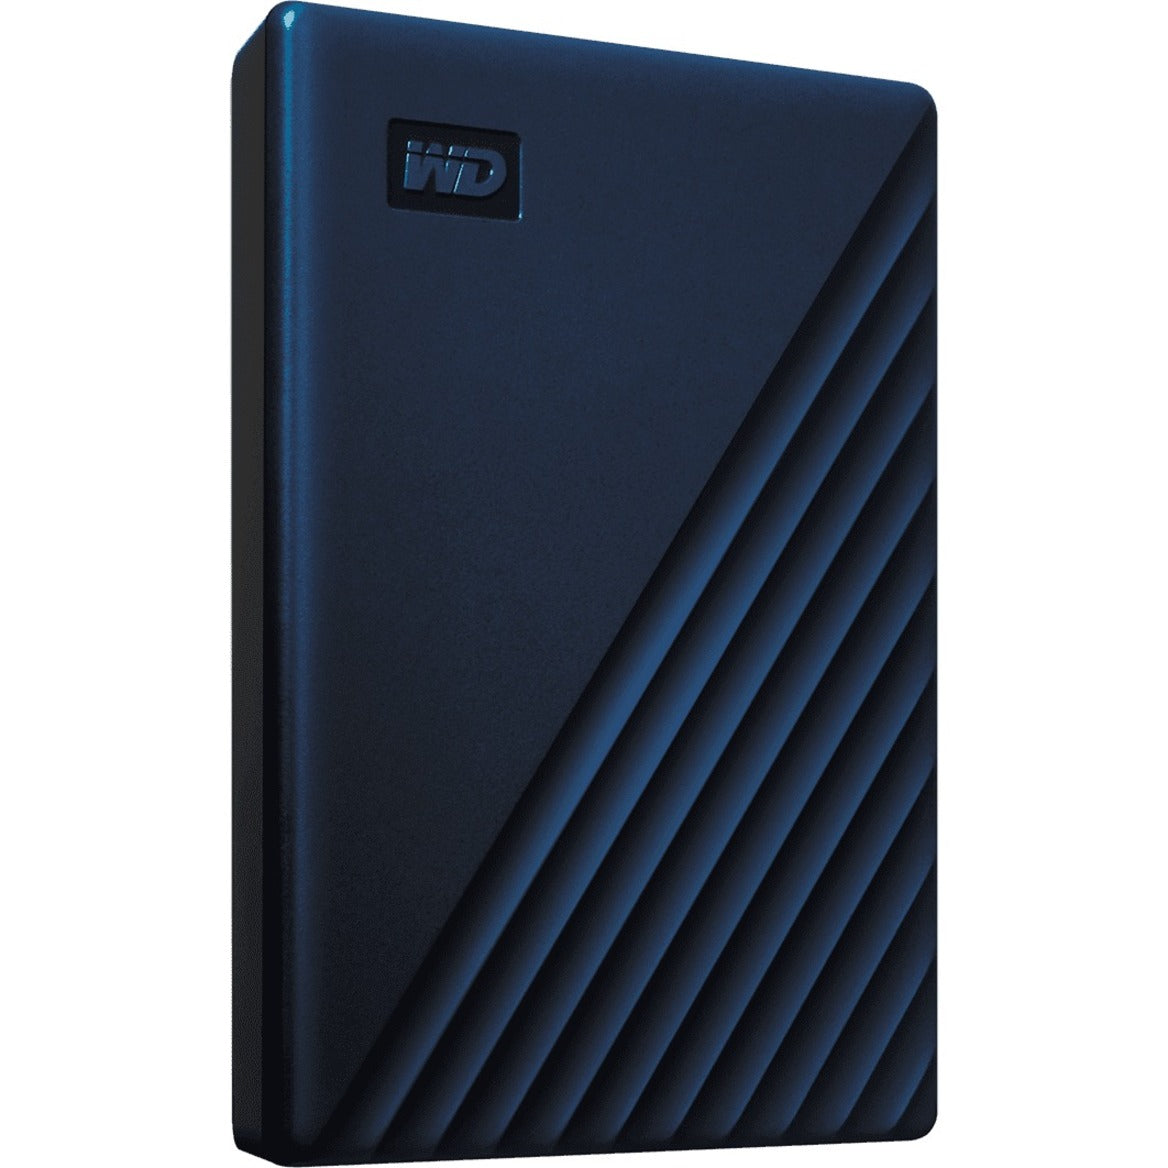 WD My Passport for Mac WDBA2D0020BBL 2 TB Portable Hard Drive - 2.5" External - Midnight Blue